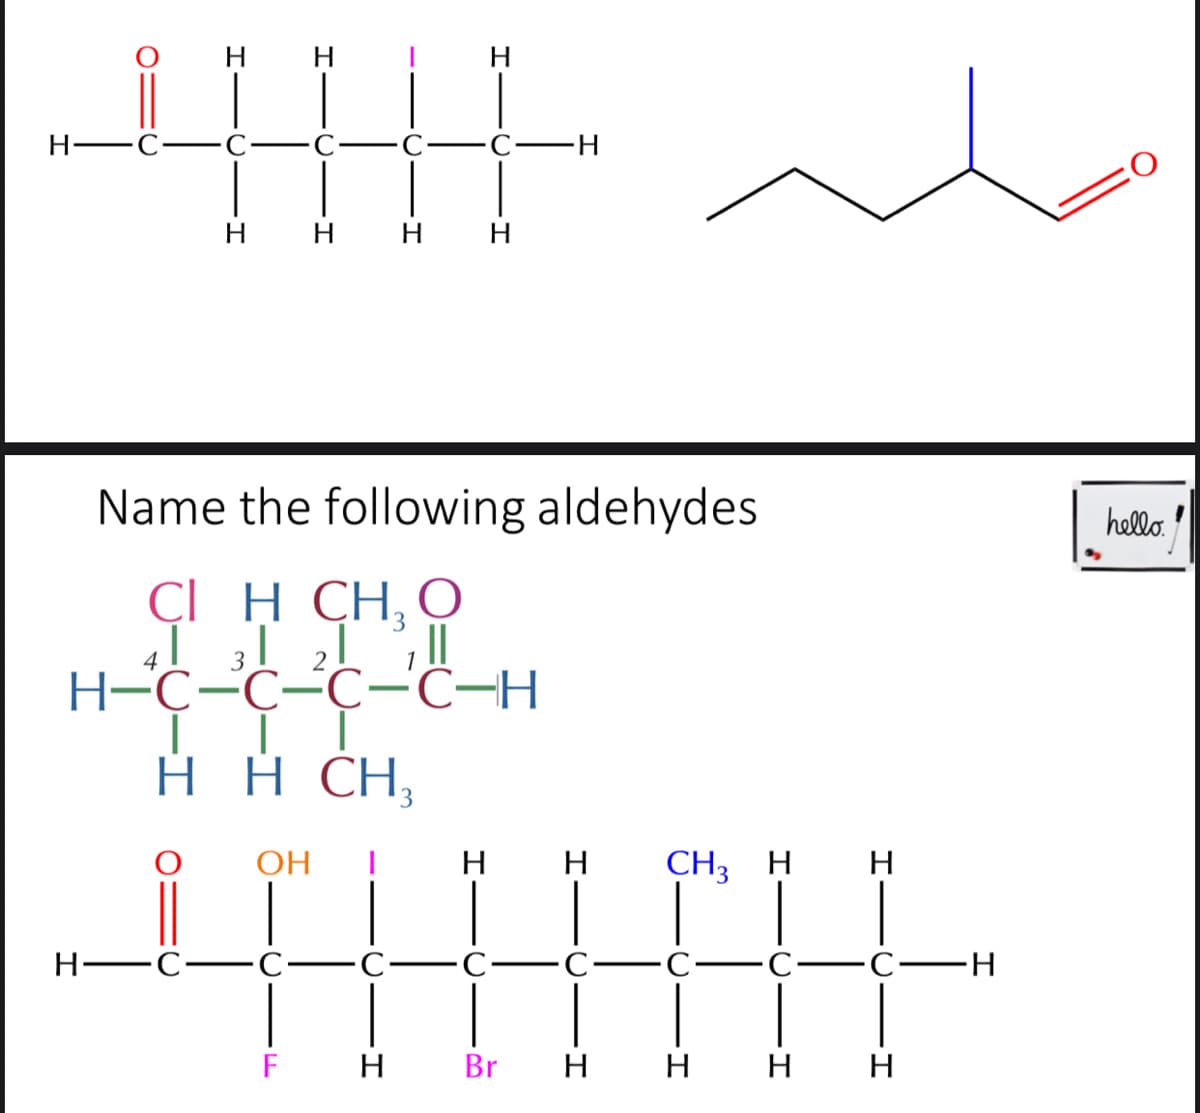 H
H-
н н
H
Н
Name the following aldehydes
hello.
ÇI H CH, O
41 I 21 |
Н-С-С-С-С-Н
нН СH,
ОН
н н
CH3 H H
Н—с-
C-
С—с-
-C-C·
-С—н
F H
Br
н н н н
